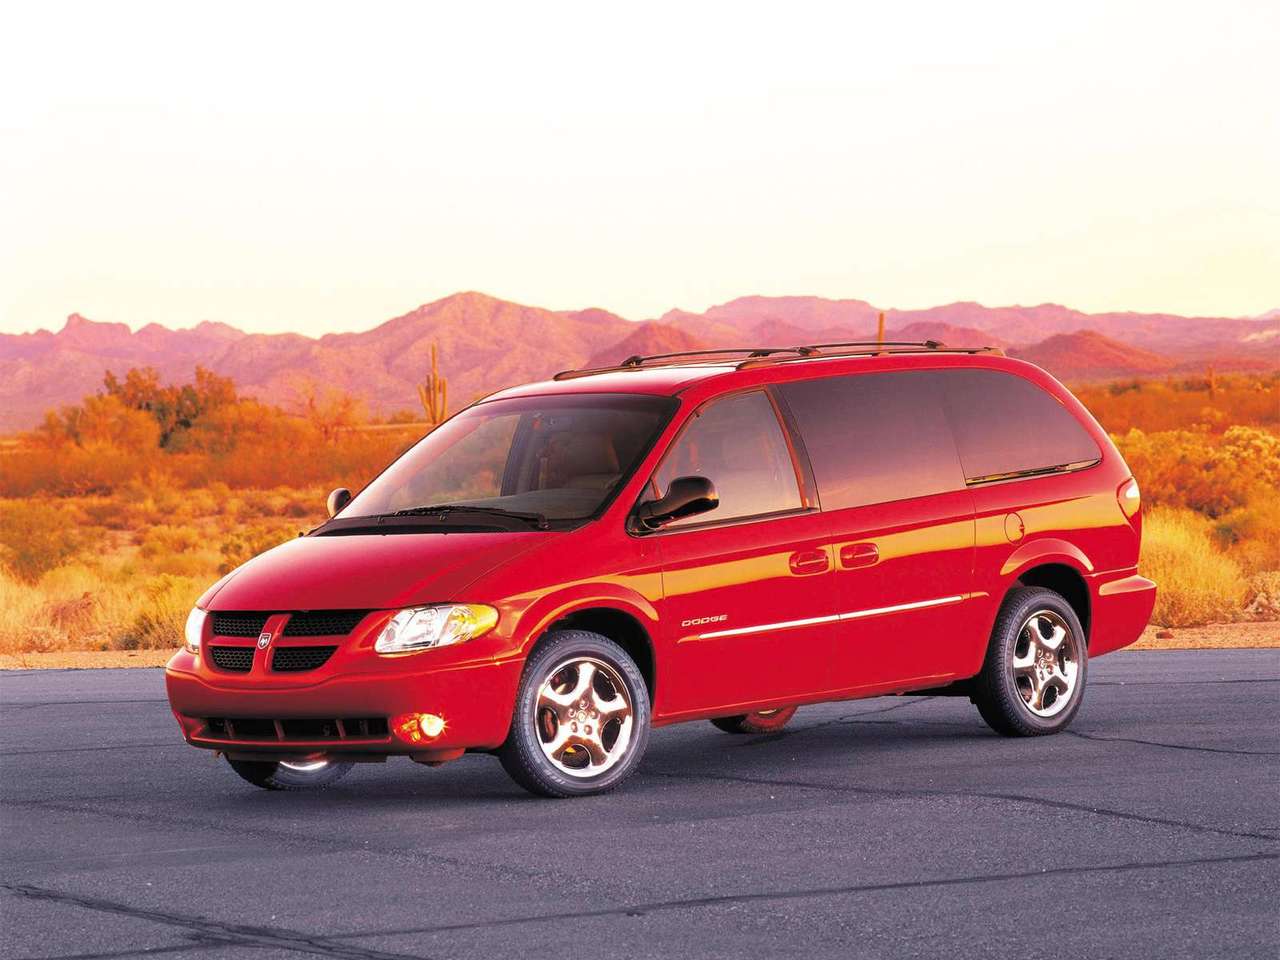 Chrysler minivan problems with transmission